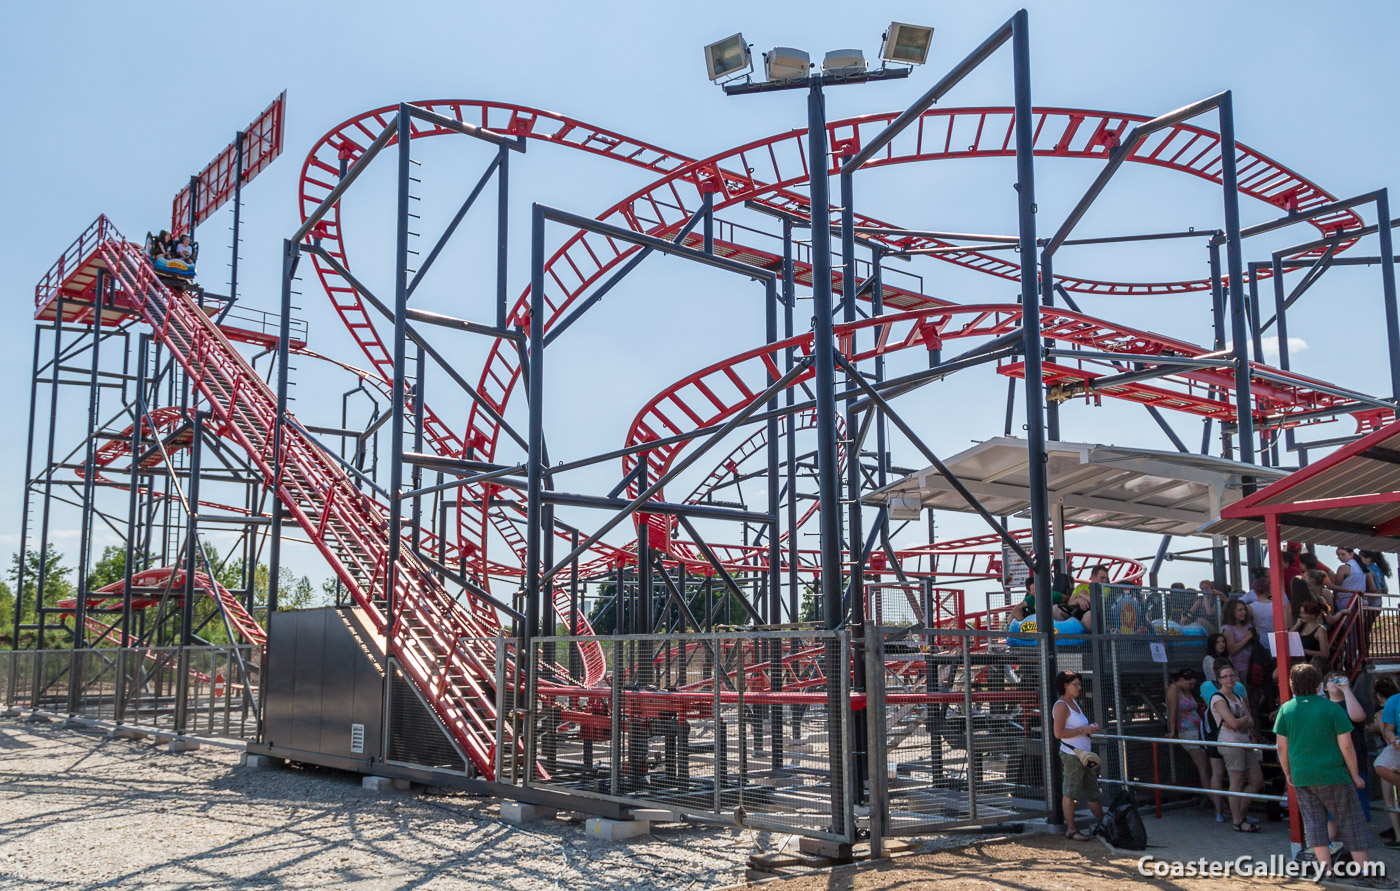 Sky Spin spinning roller coaster at Skyline Park in Bad Wrishofen, Bavaria, Germany